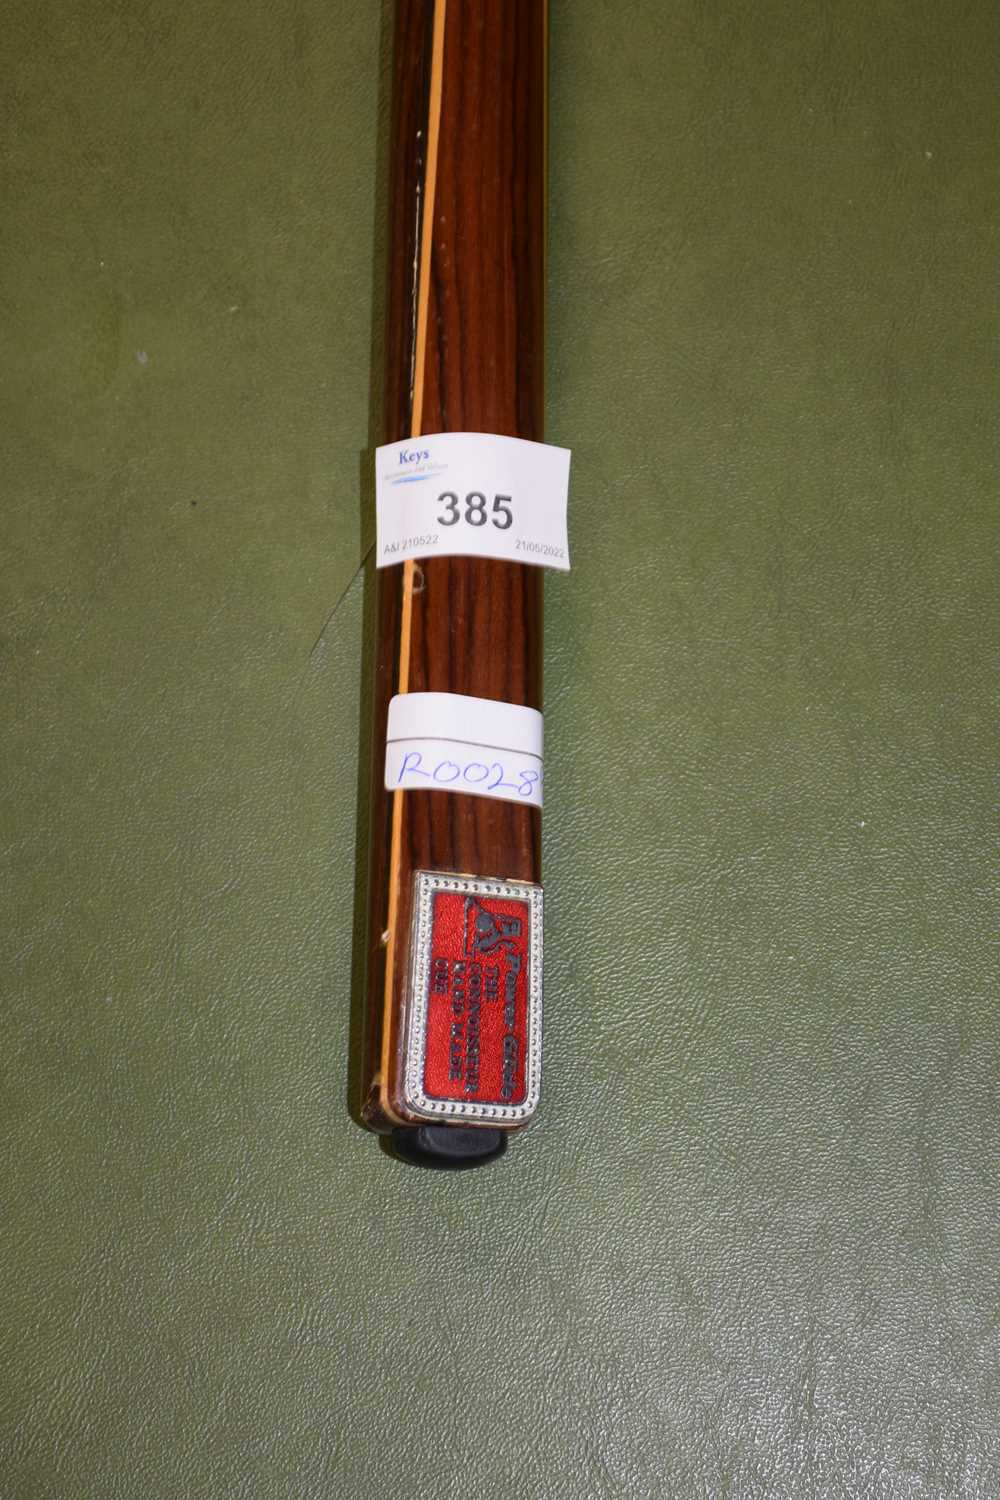 Powerglide cue, The Connoisseur, 143cm long - Image 2 of 2